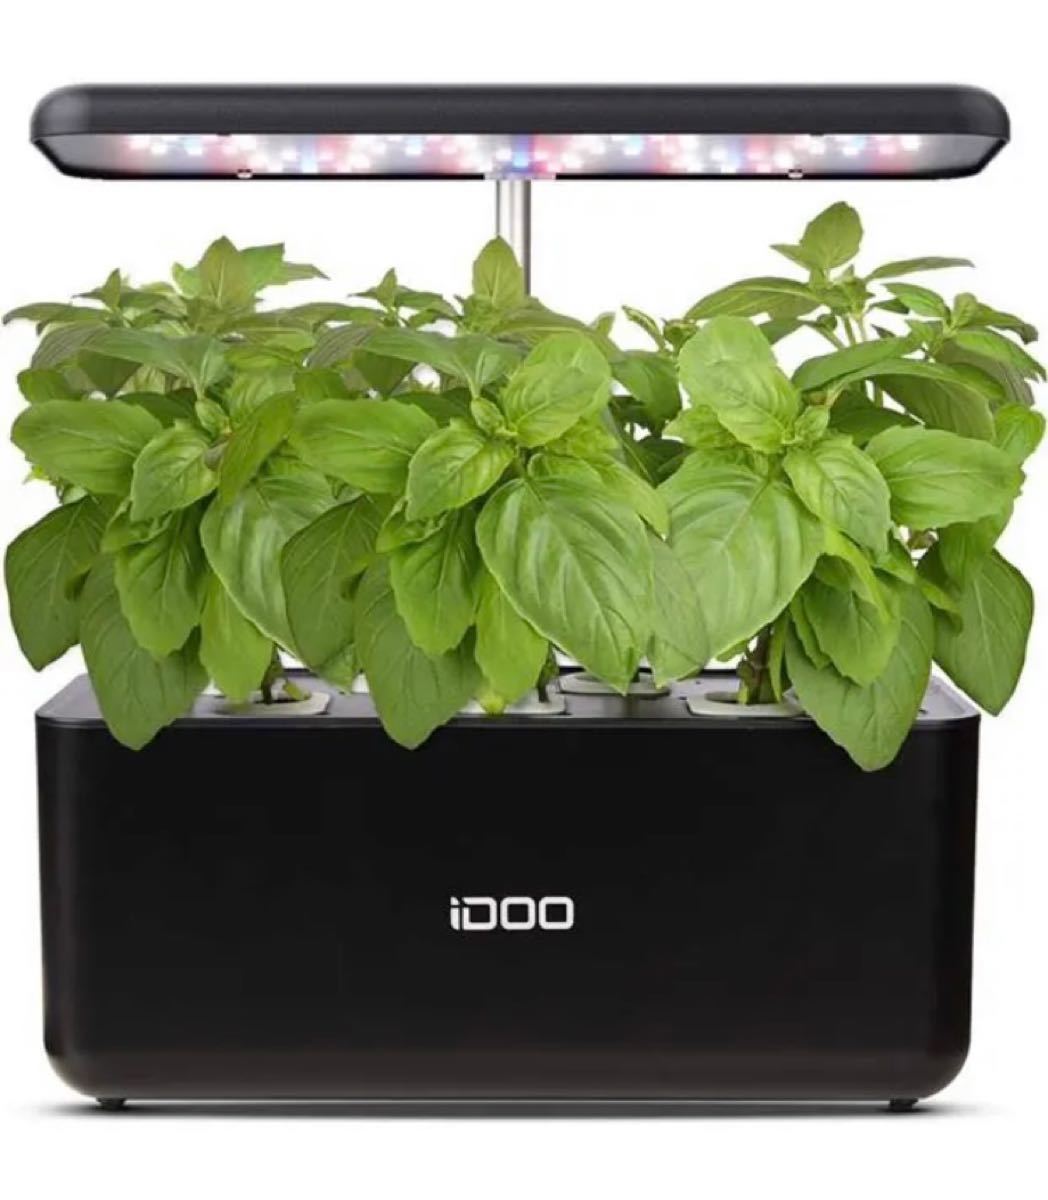 iDOO 水耕栽培キット 野菜栽培セット 植物育成ライト付き 室内 水耕